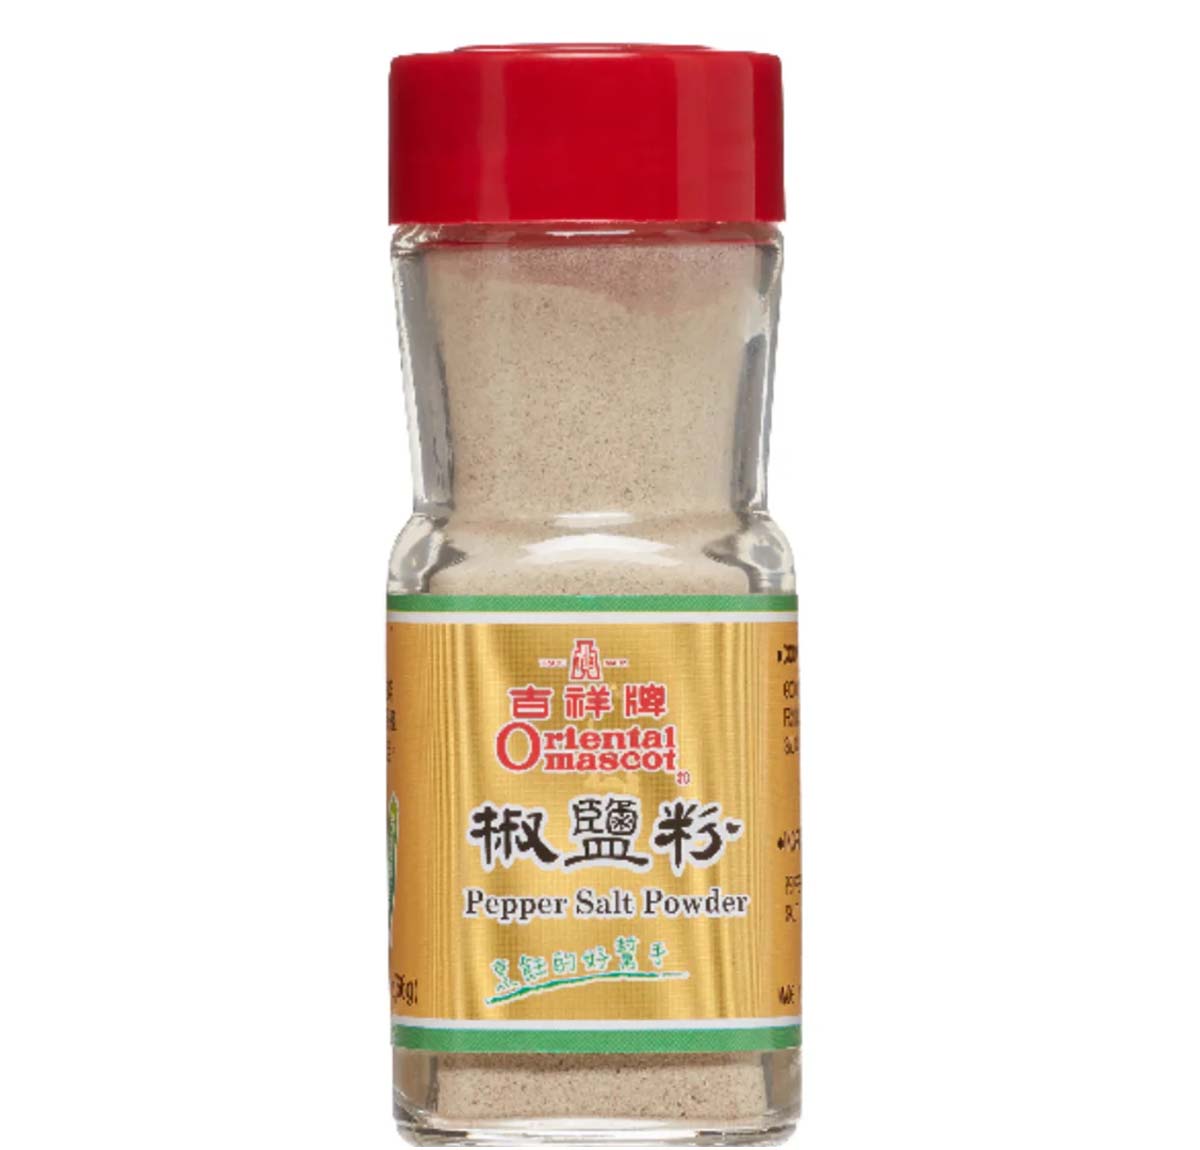 Bottled pepper salt for Taiwanese salt and pepper chicken marinade. 